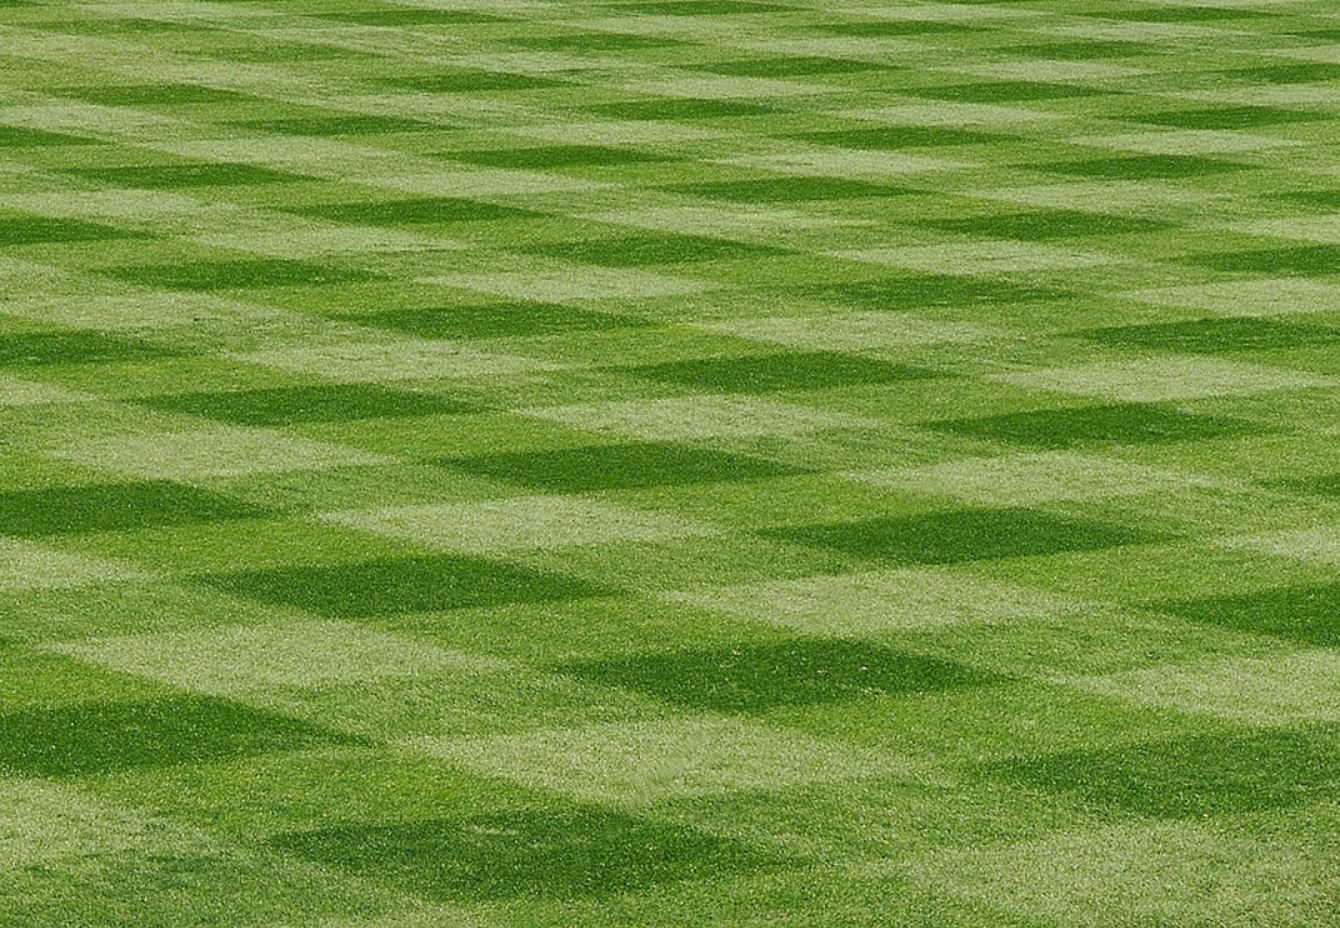 Baseball Field Background Image